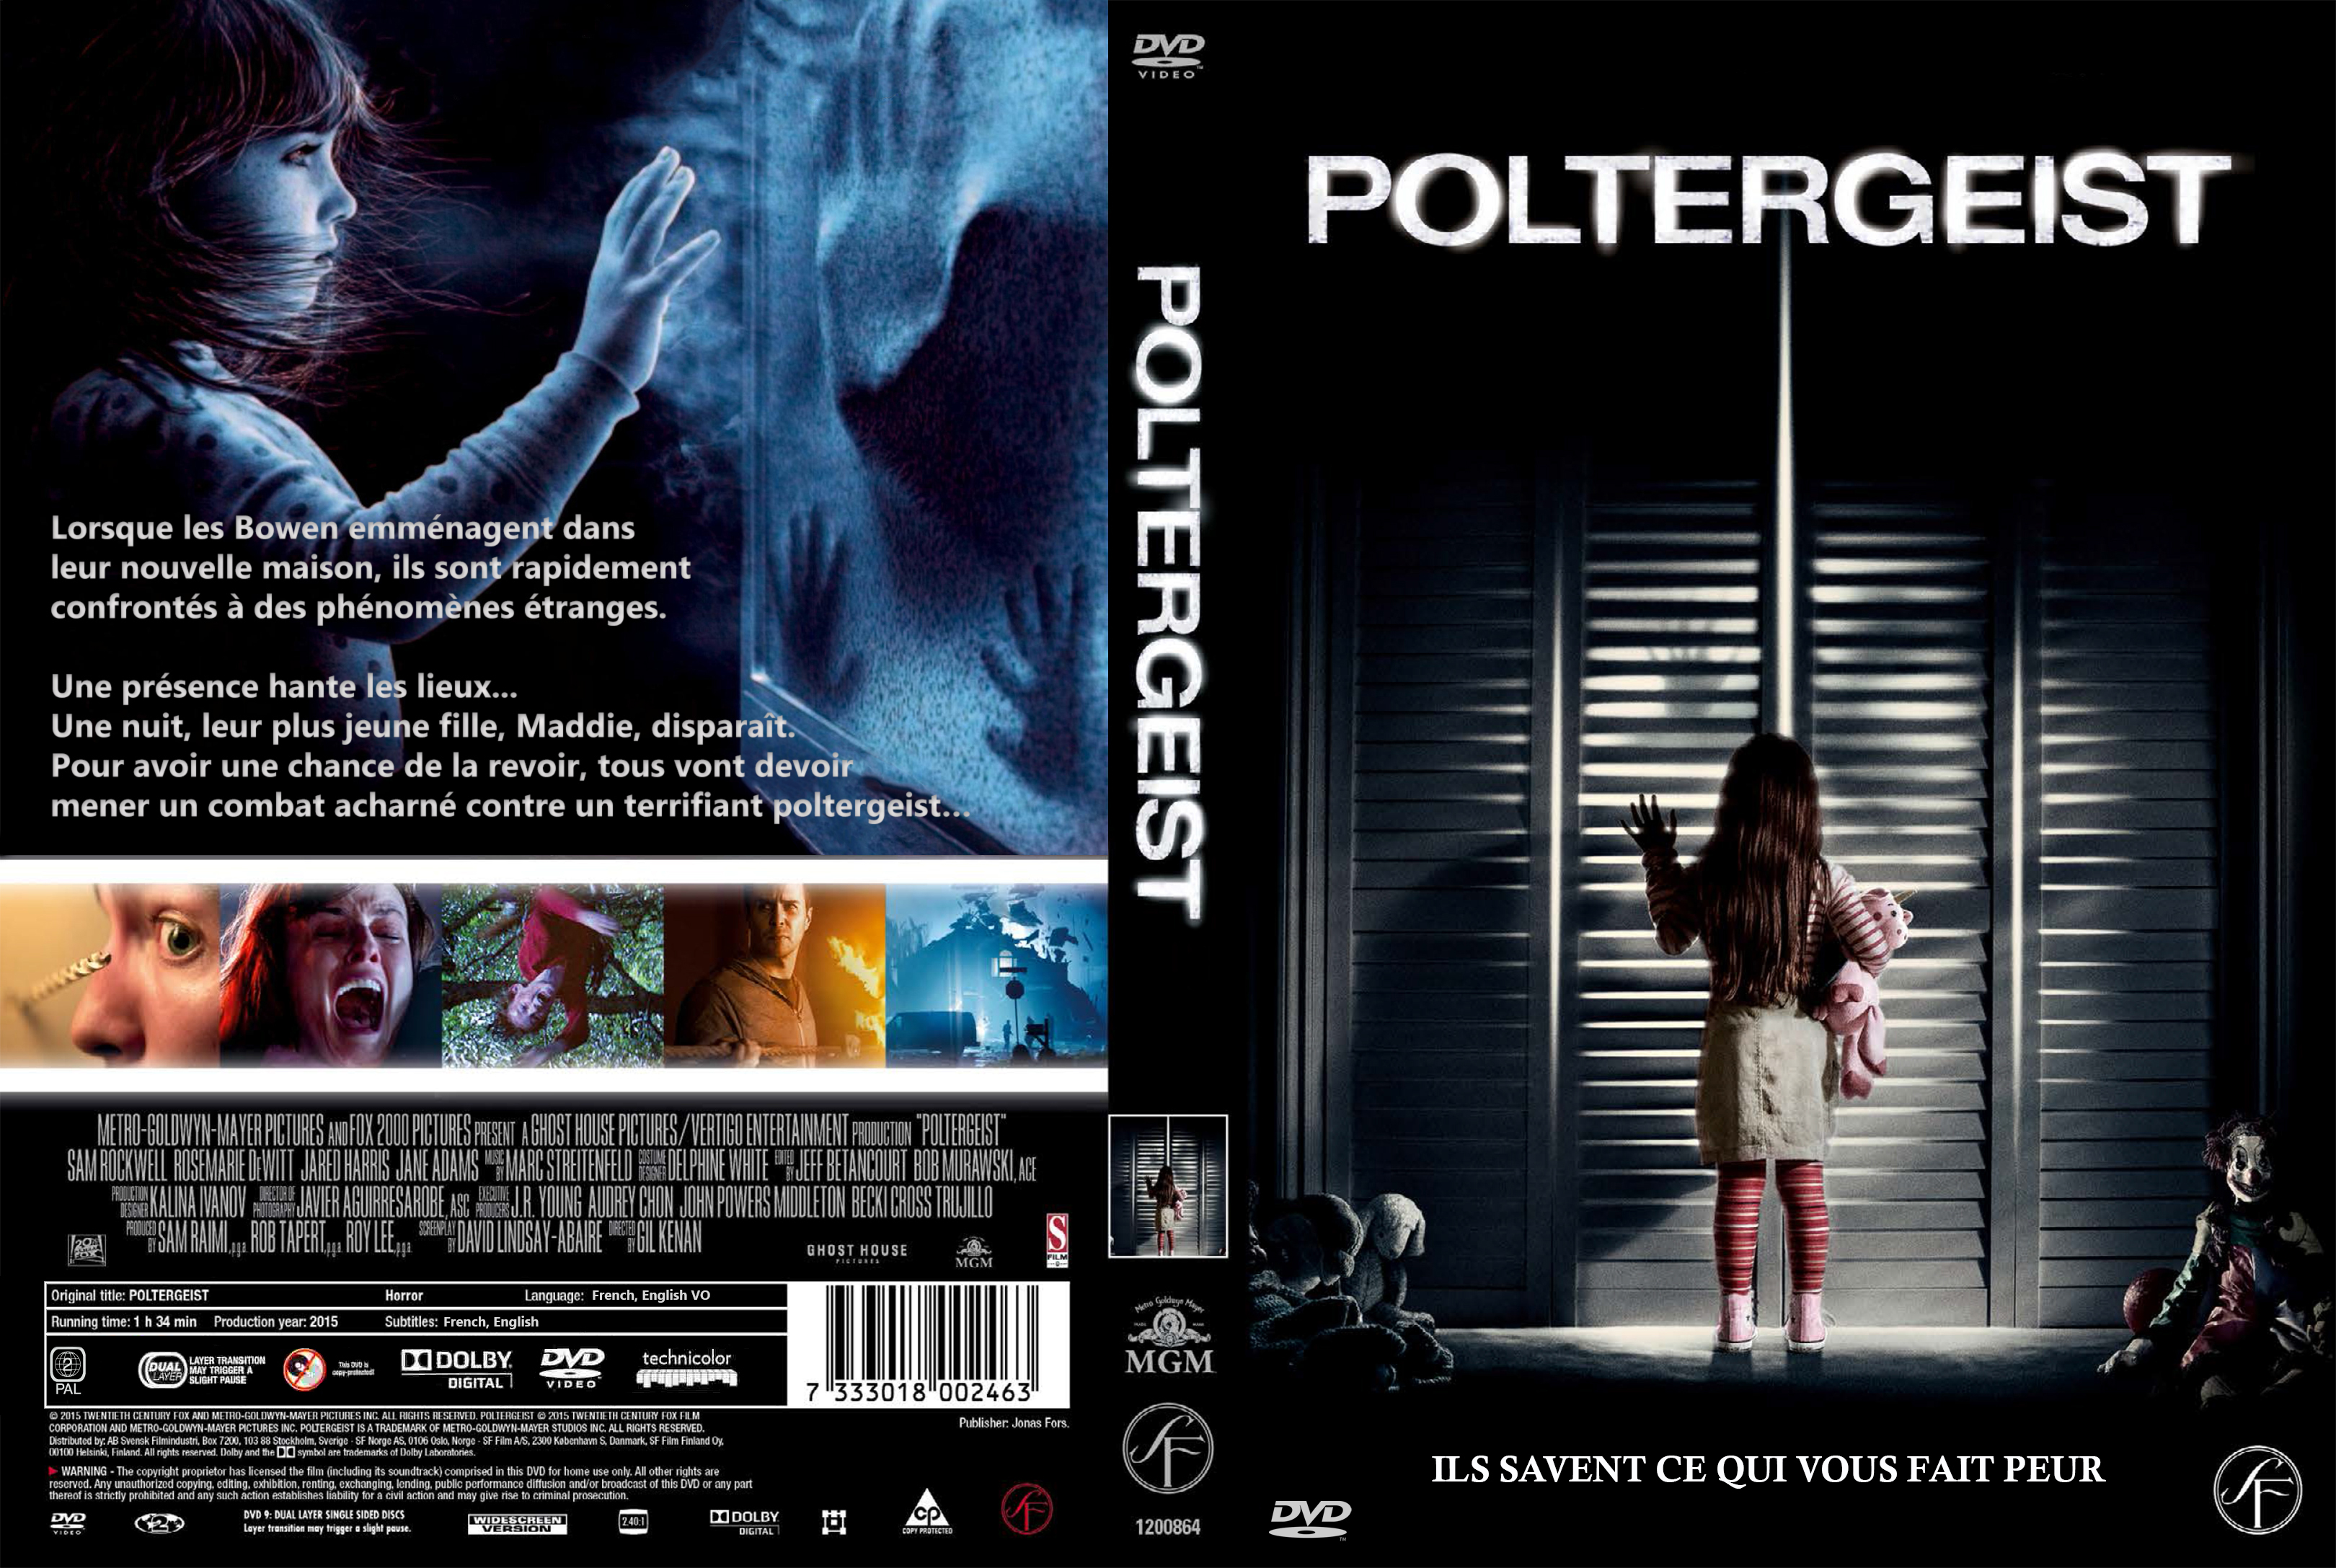 Jaquette DVD Poltergeist 2015 custom